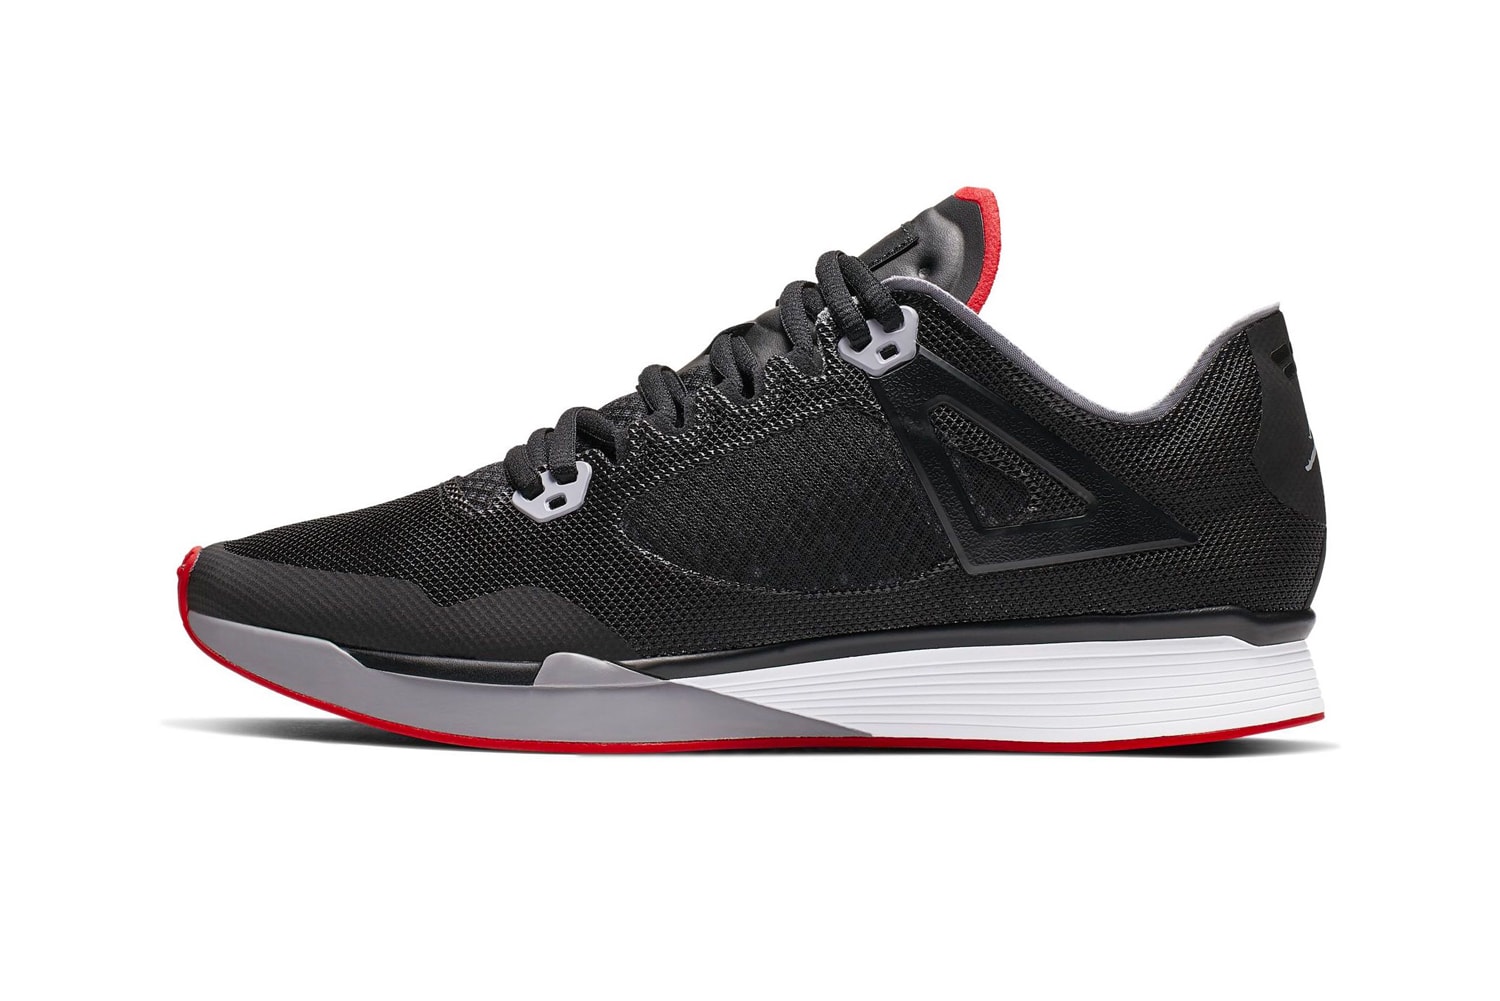 Jordan 89 Racer Black red bred Release Info Date runner running jordan brand sneaker colorway first look Air Jordan 4